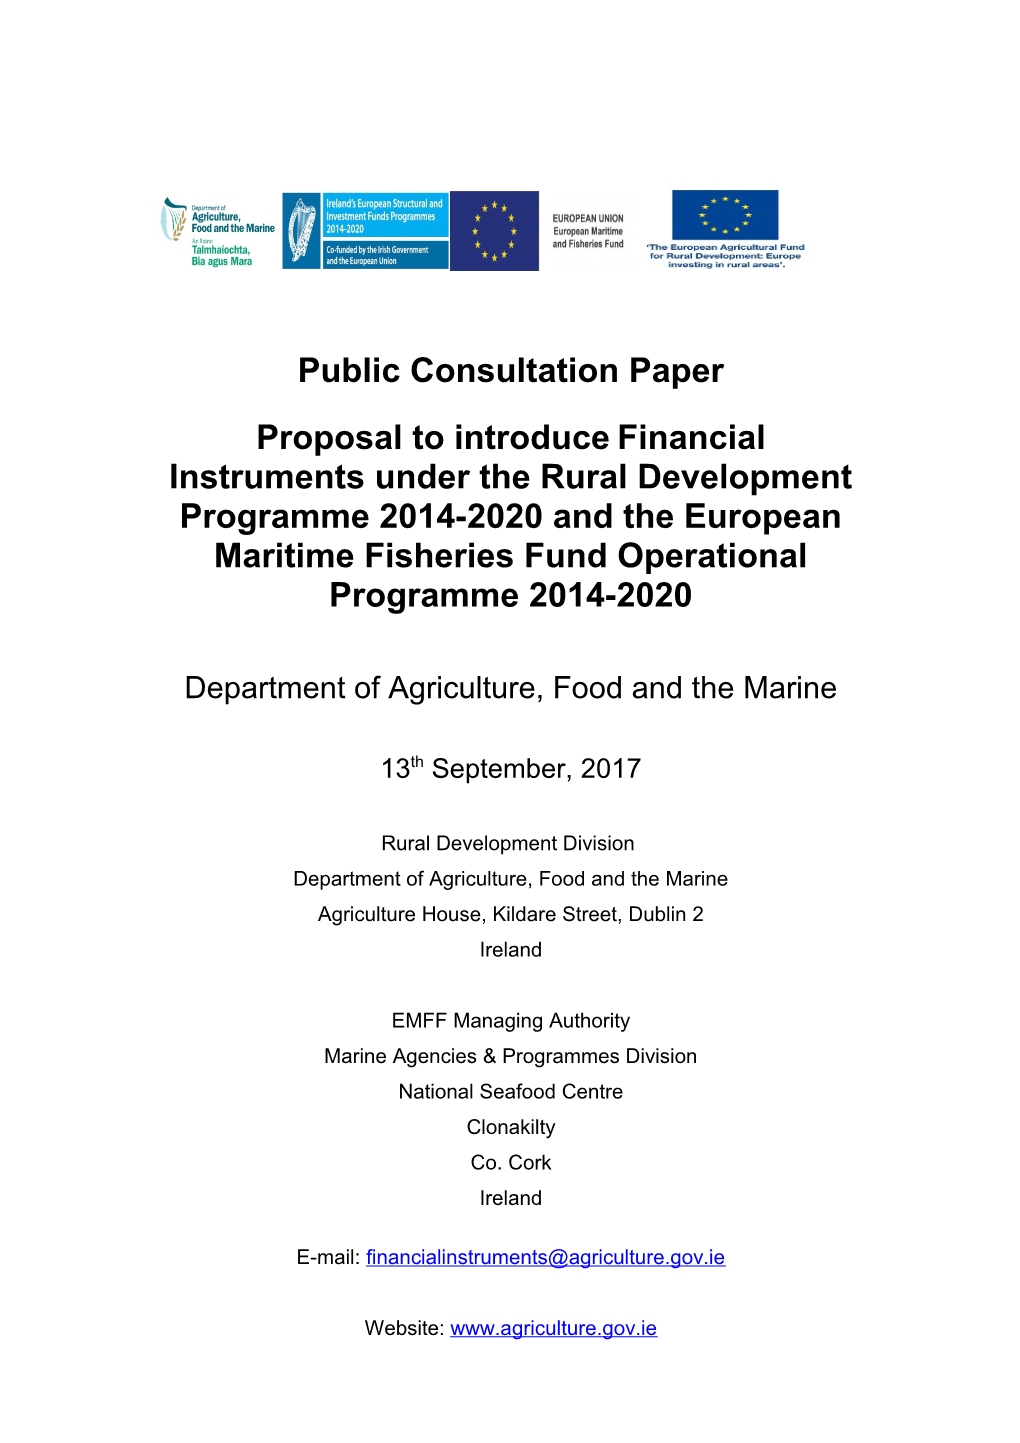 Financial Instruments- Public Consultation Paper